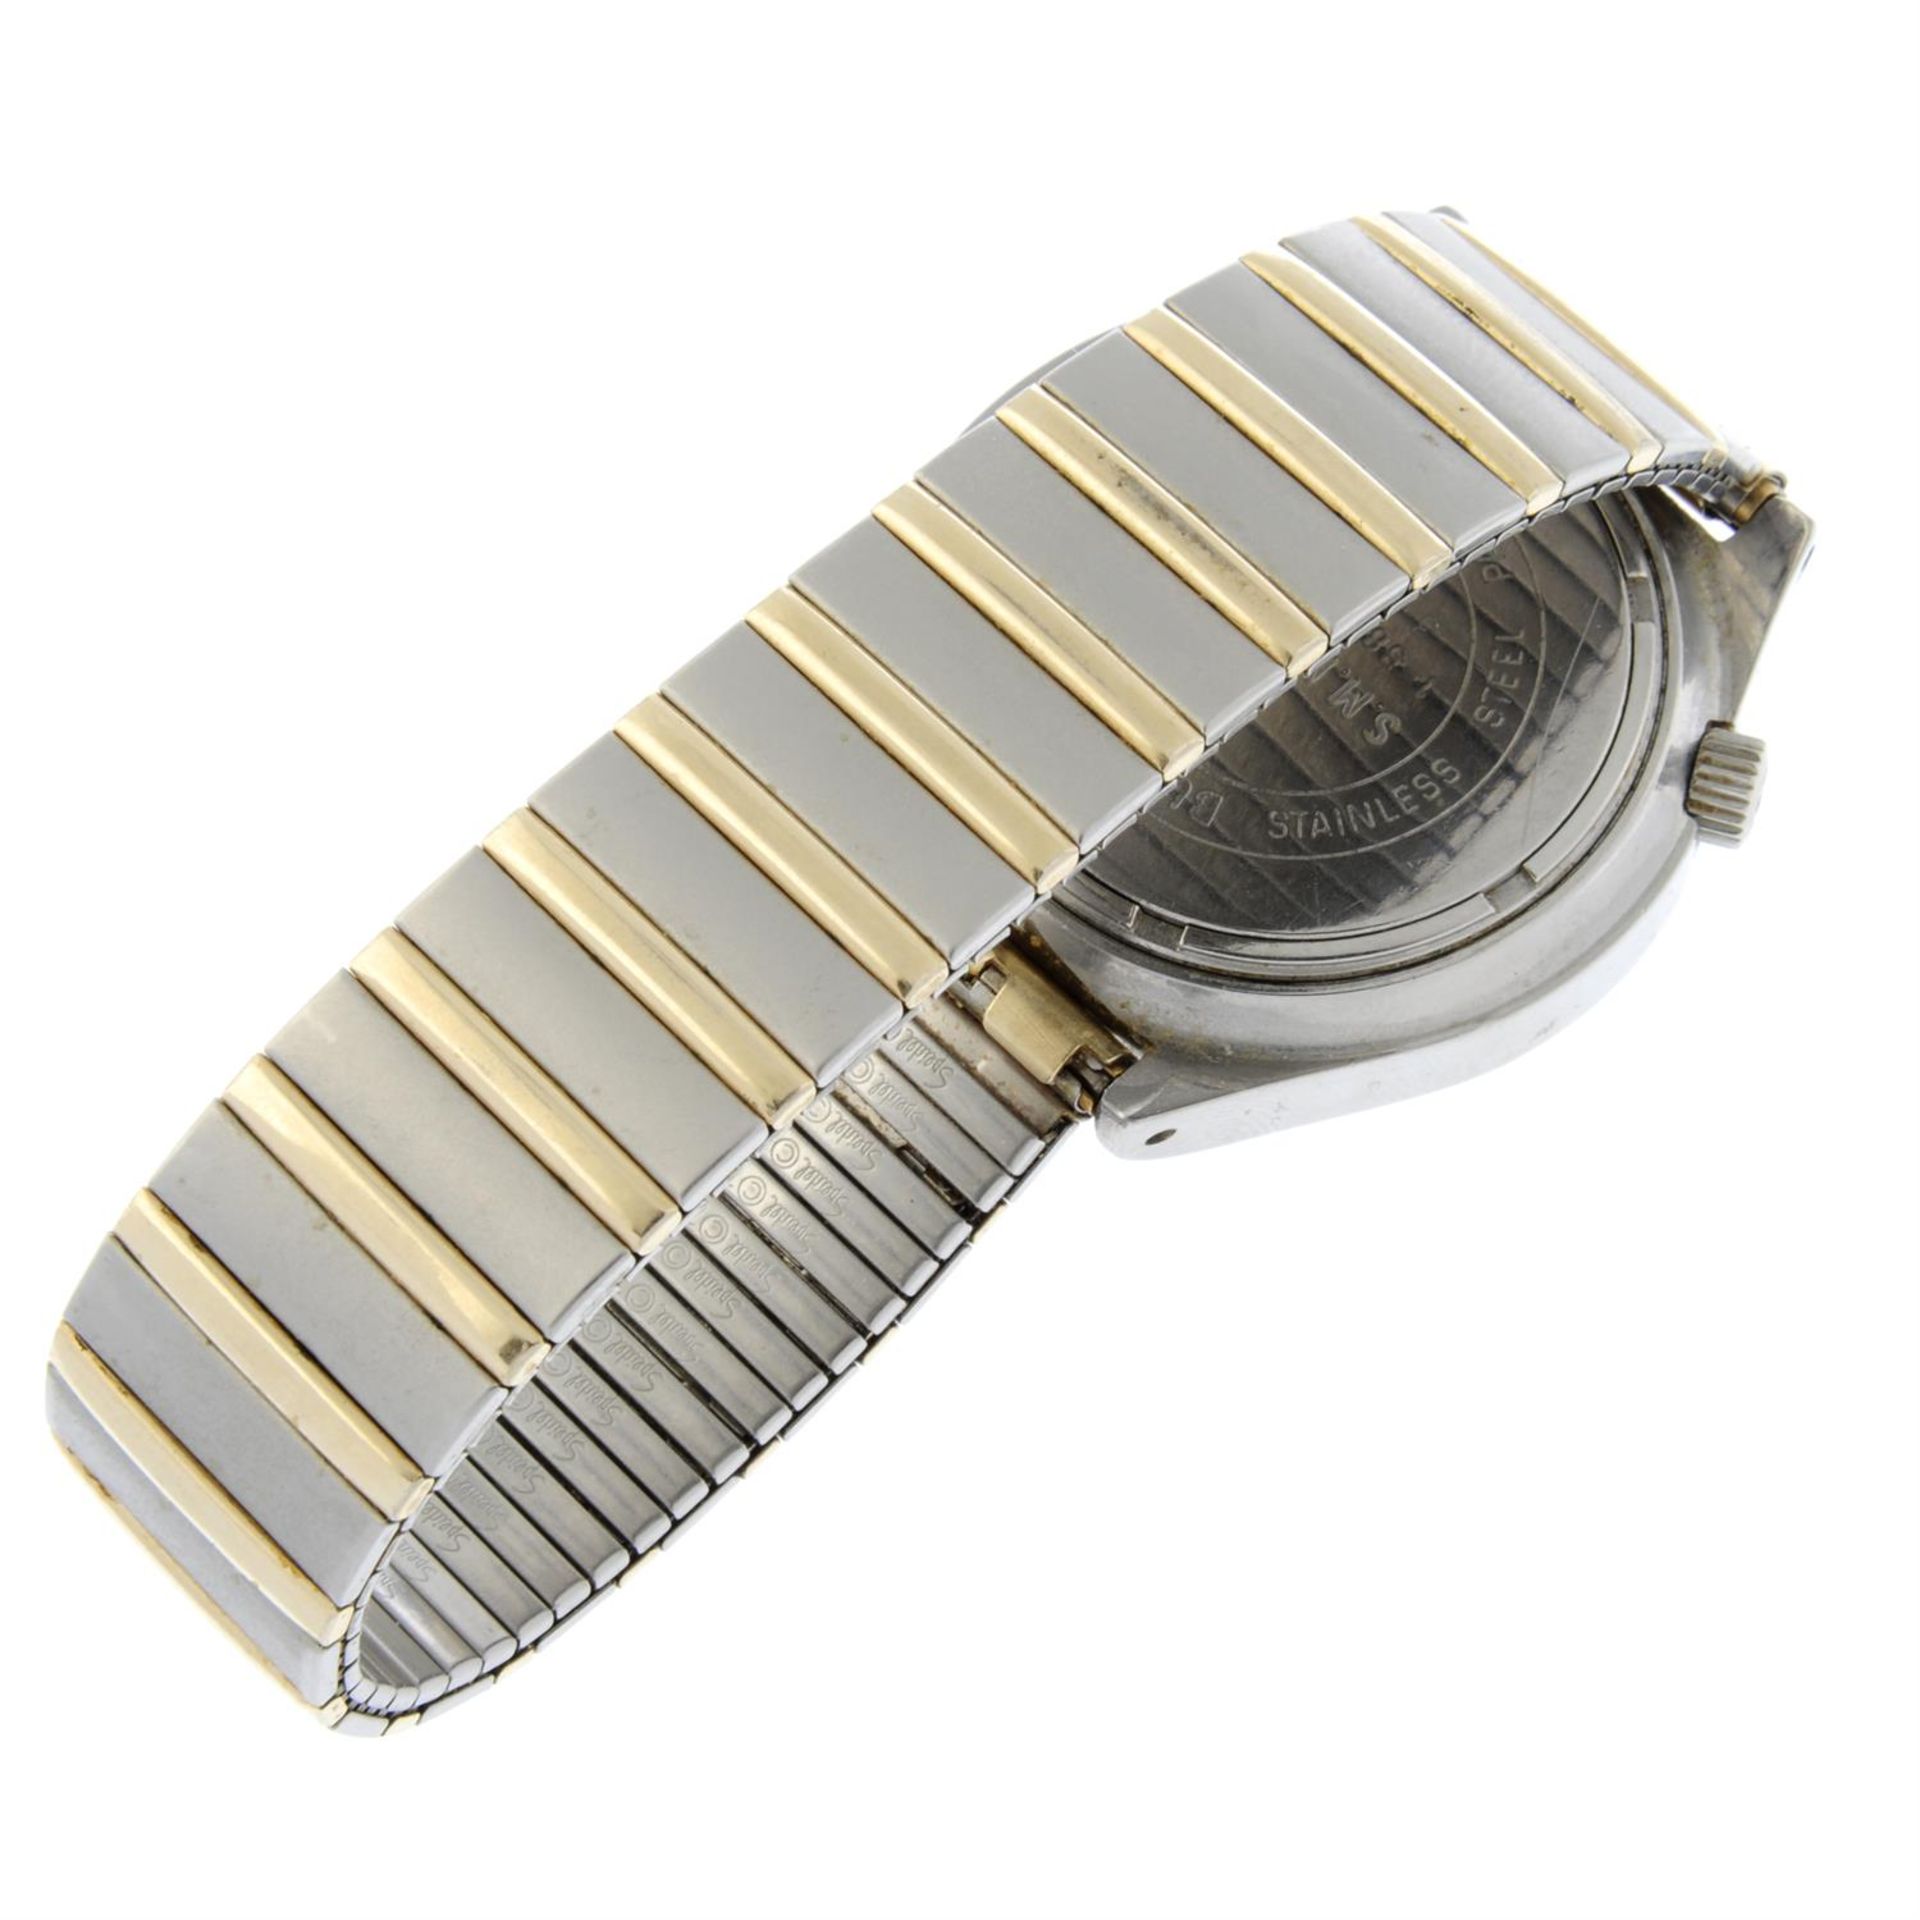 BULOVA - a bi-colour Accutron bracelet watch, 38mm. - Image 2 of 4